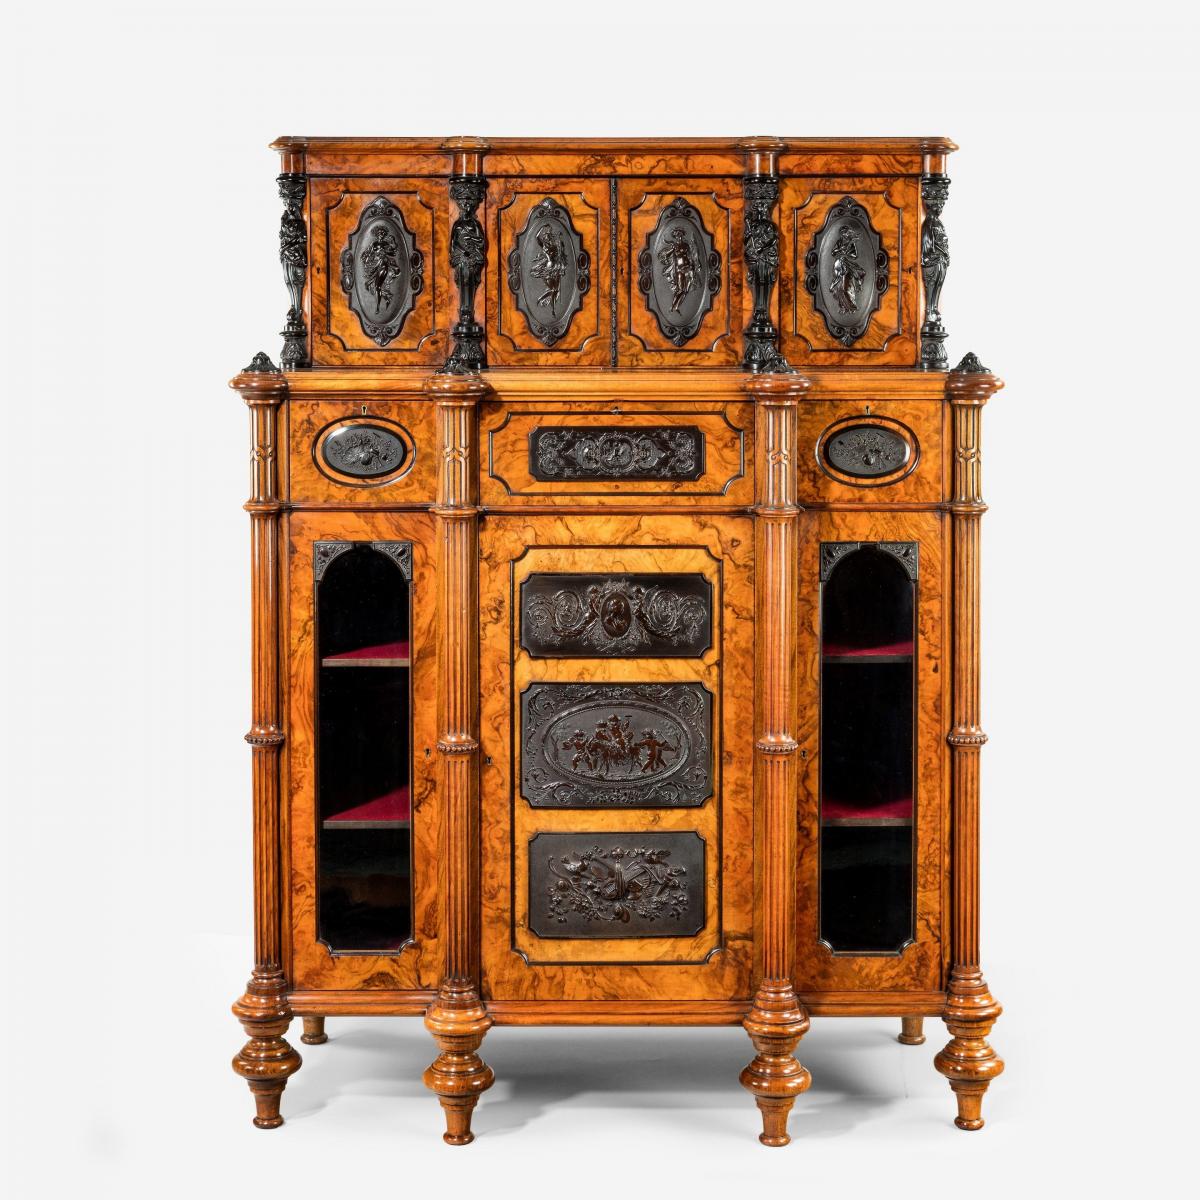 A superb quality burr walnut antique cabinet